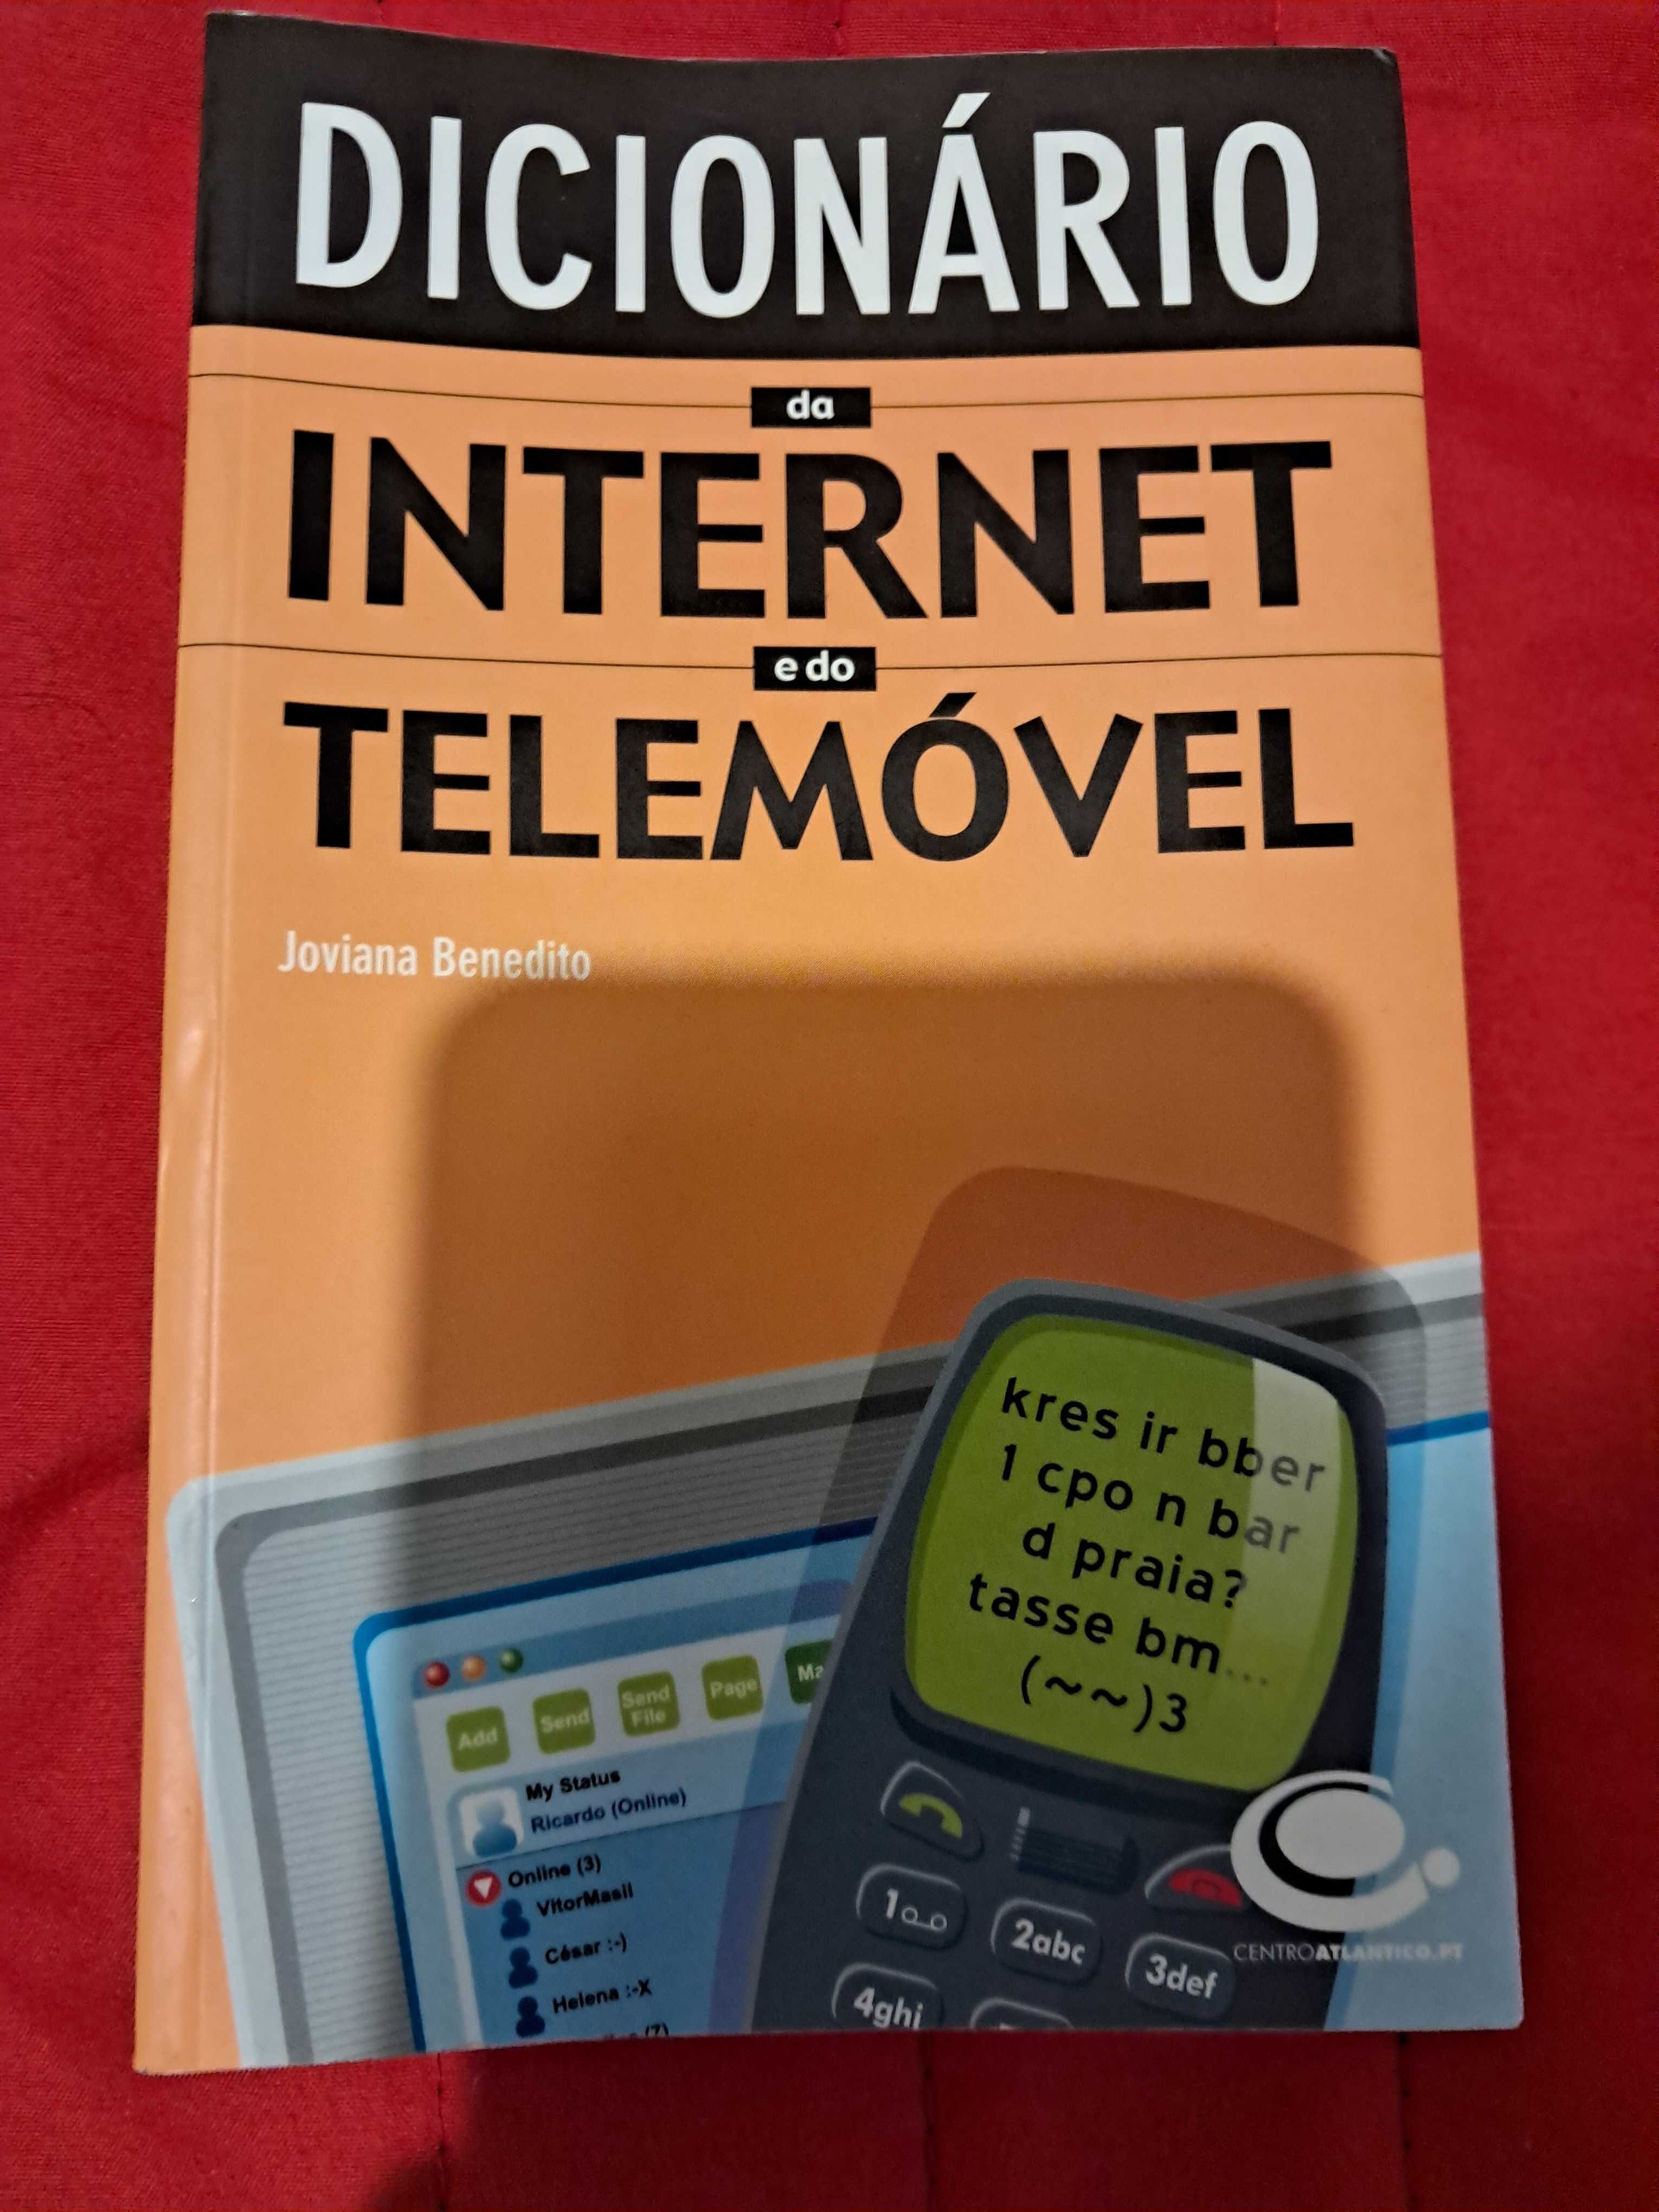 Livro dicionario da internet e telemovel